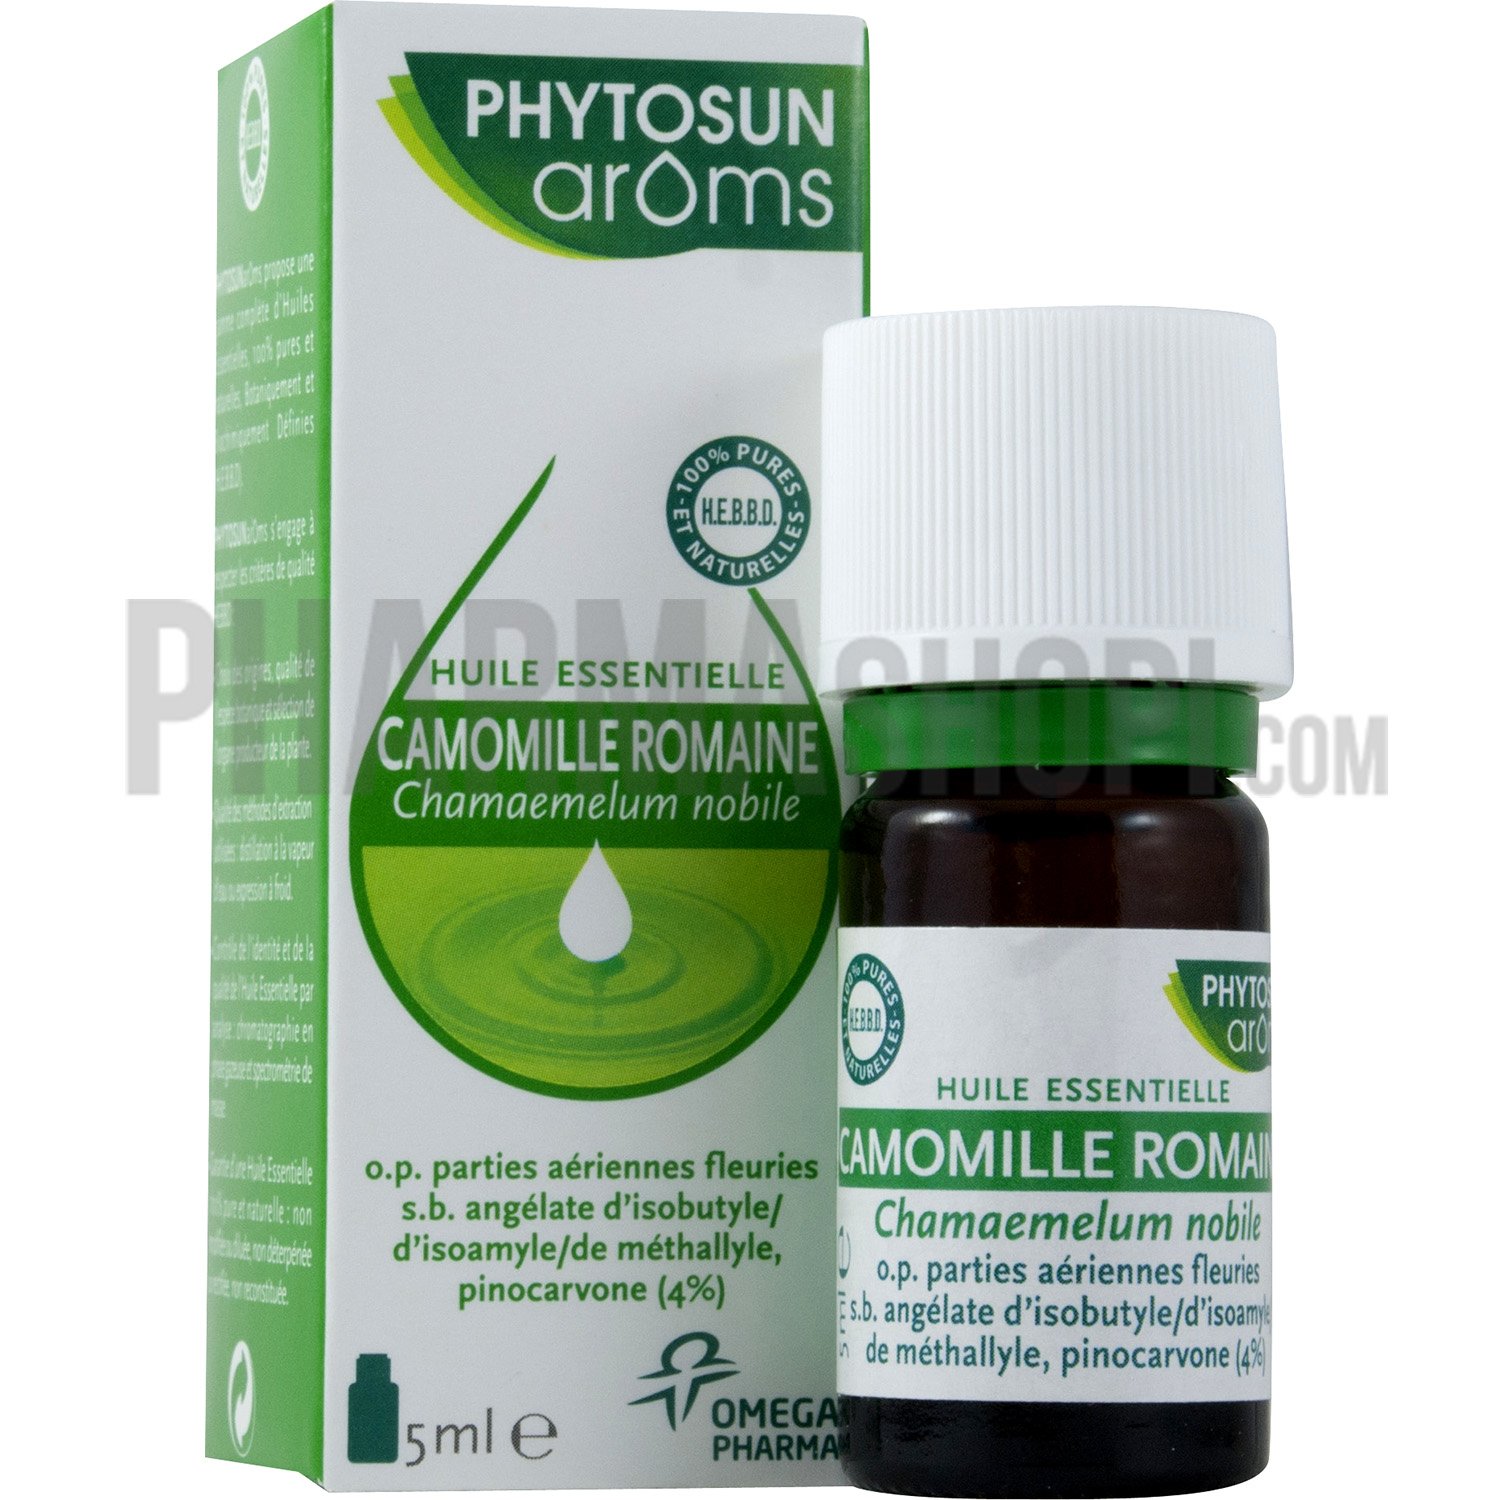 Huile essentielle camomille romaine Phytosun arôms - flacon de 5 ml